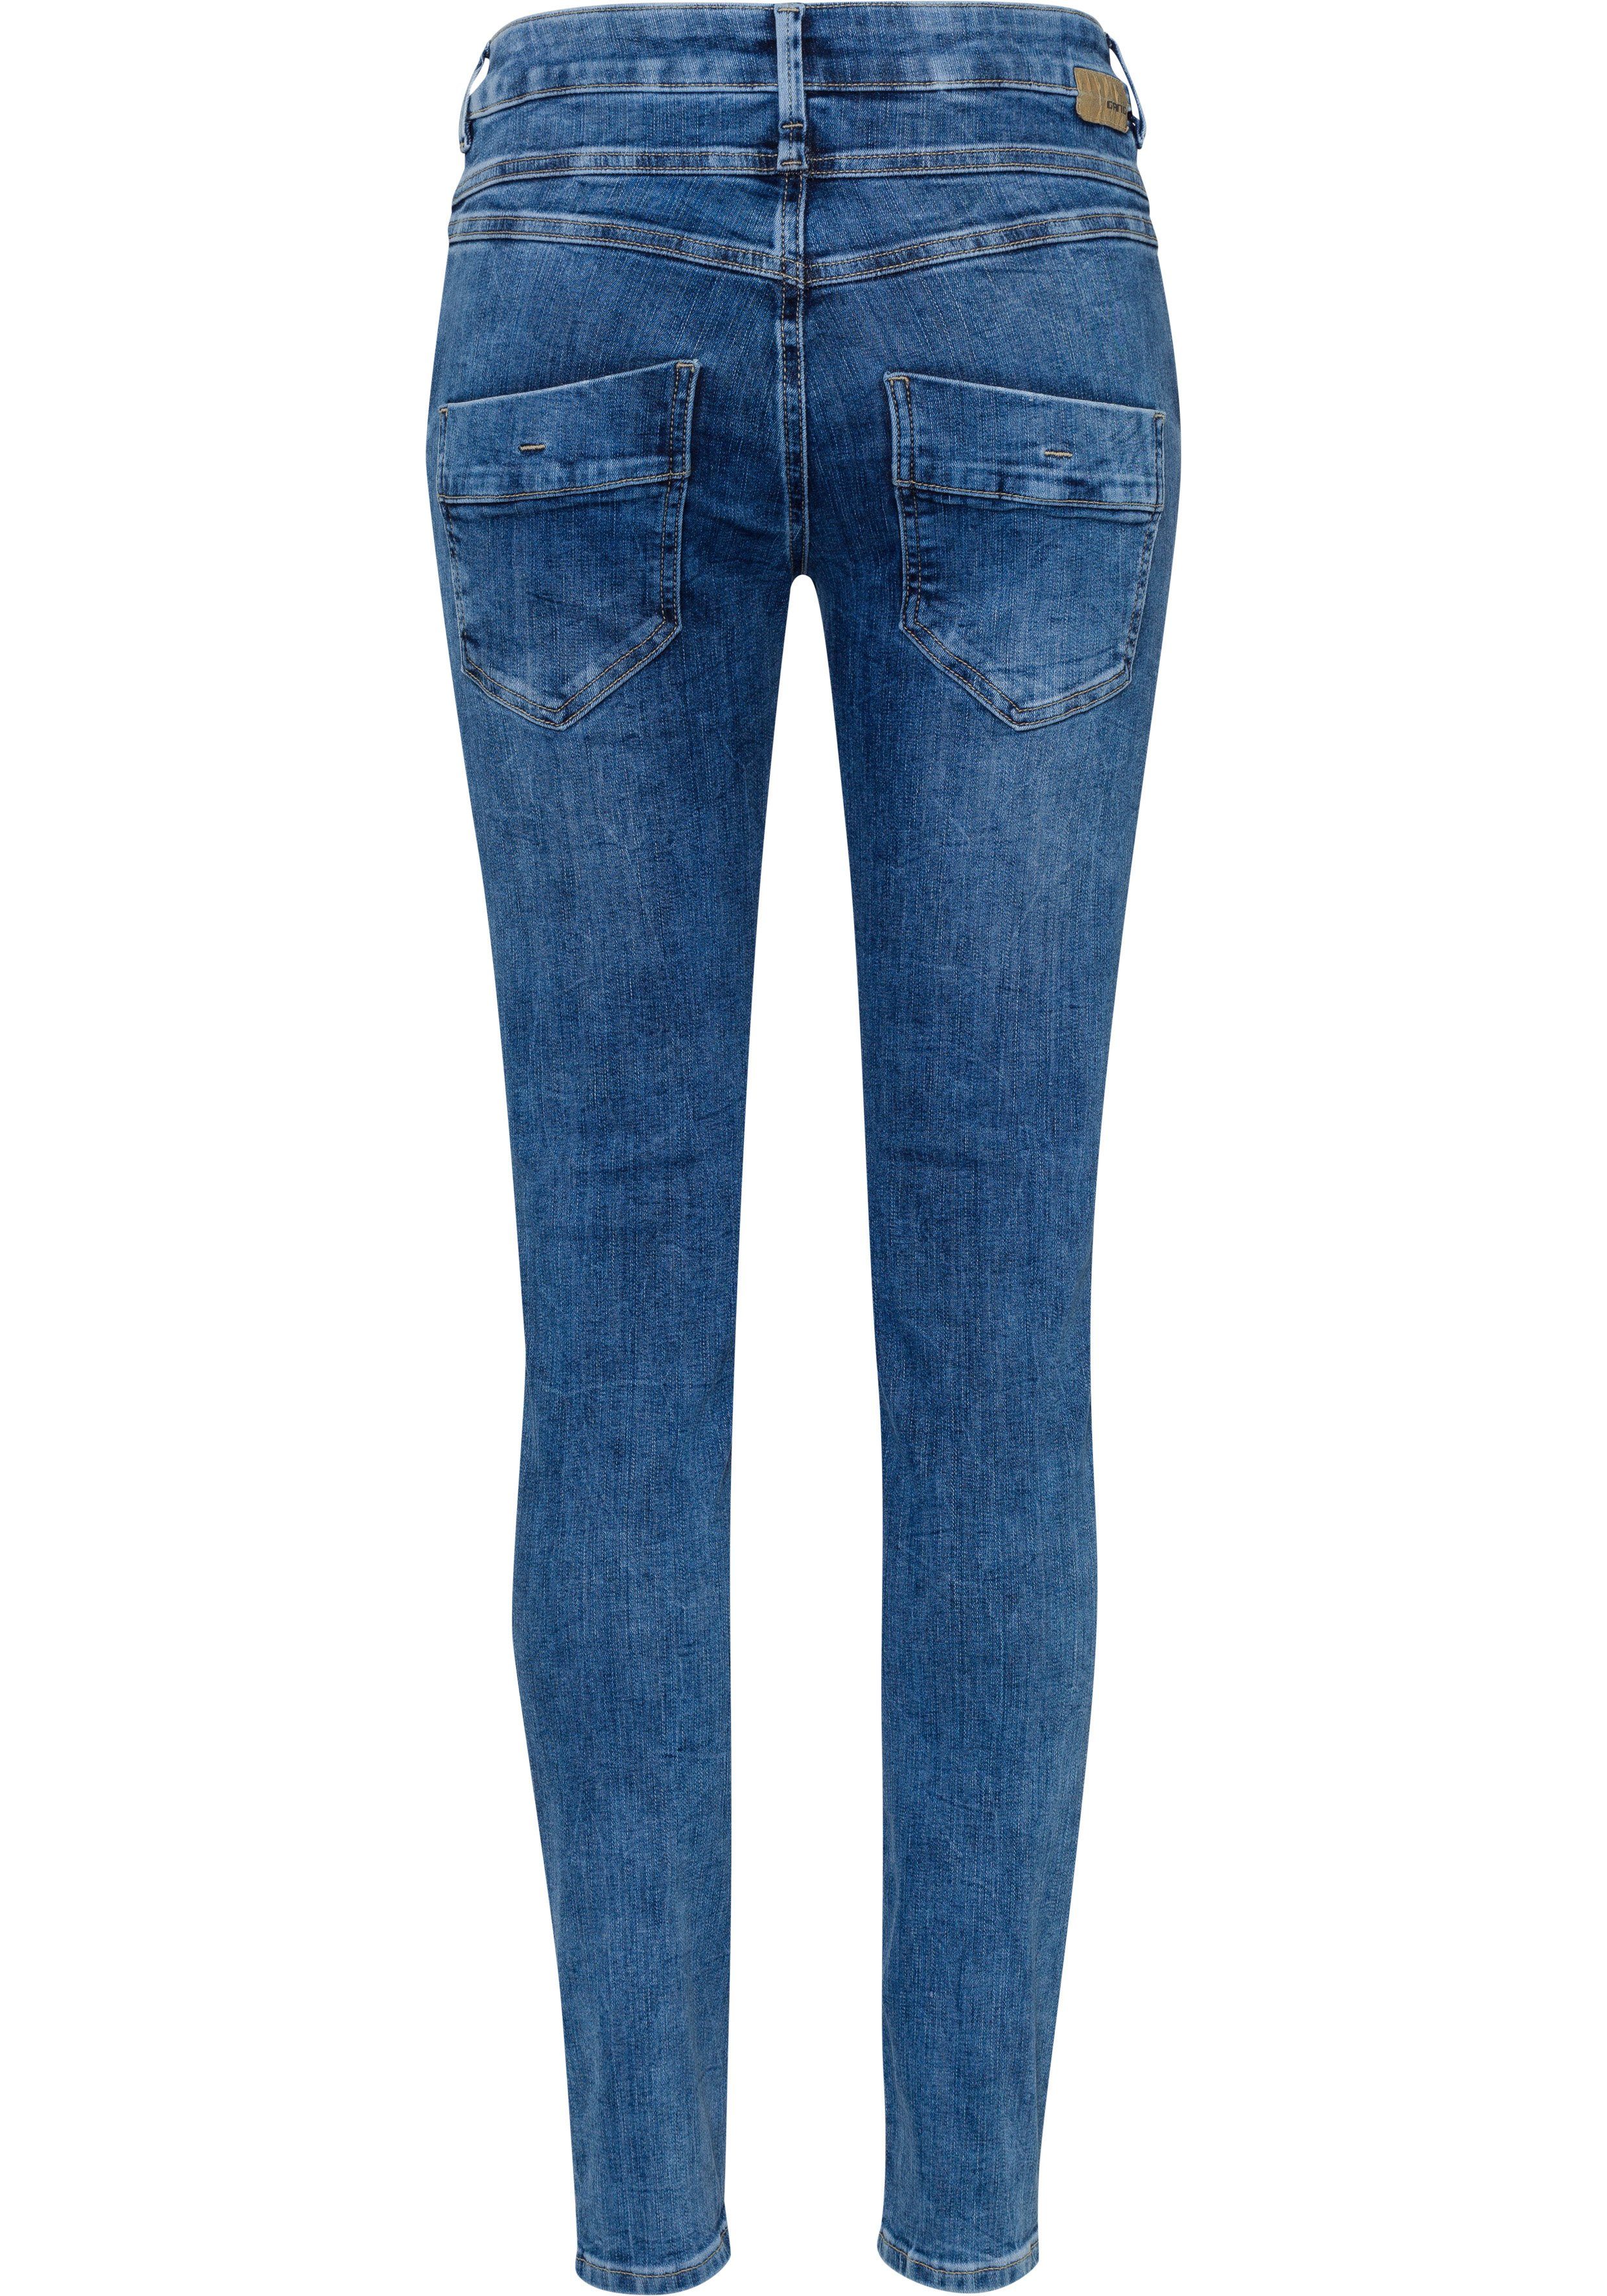 Knopfleiste offener Slim-fit-Jeans mit mid blue 94CARLI GANG